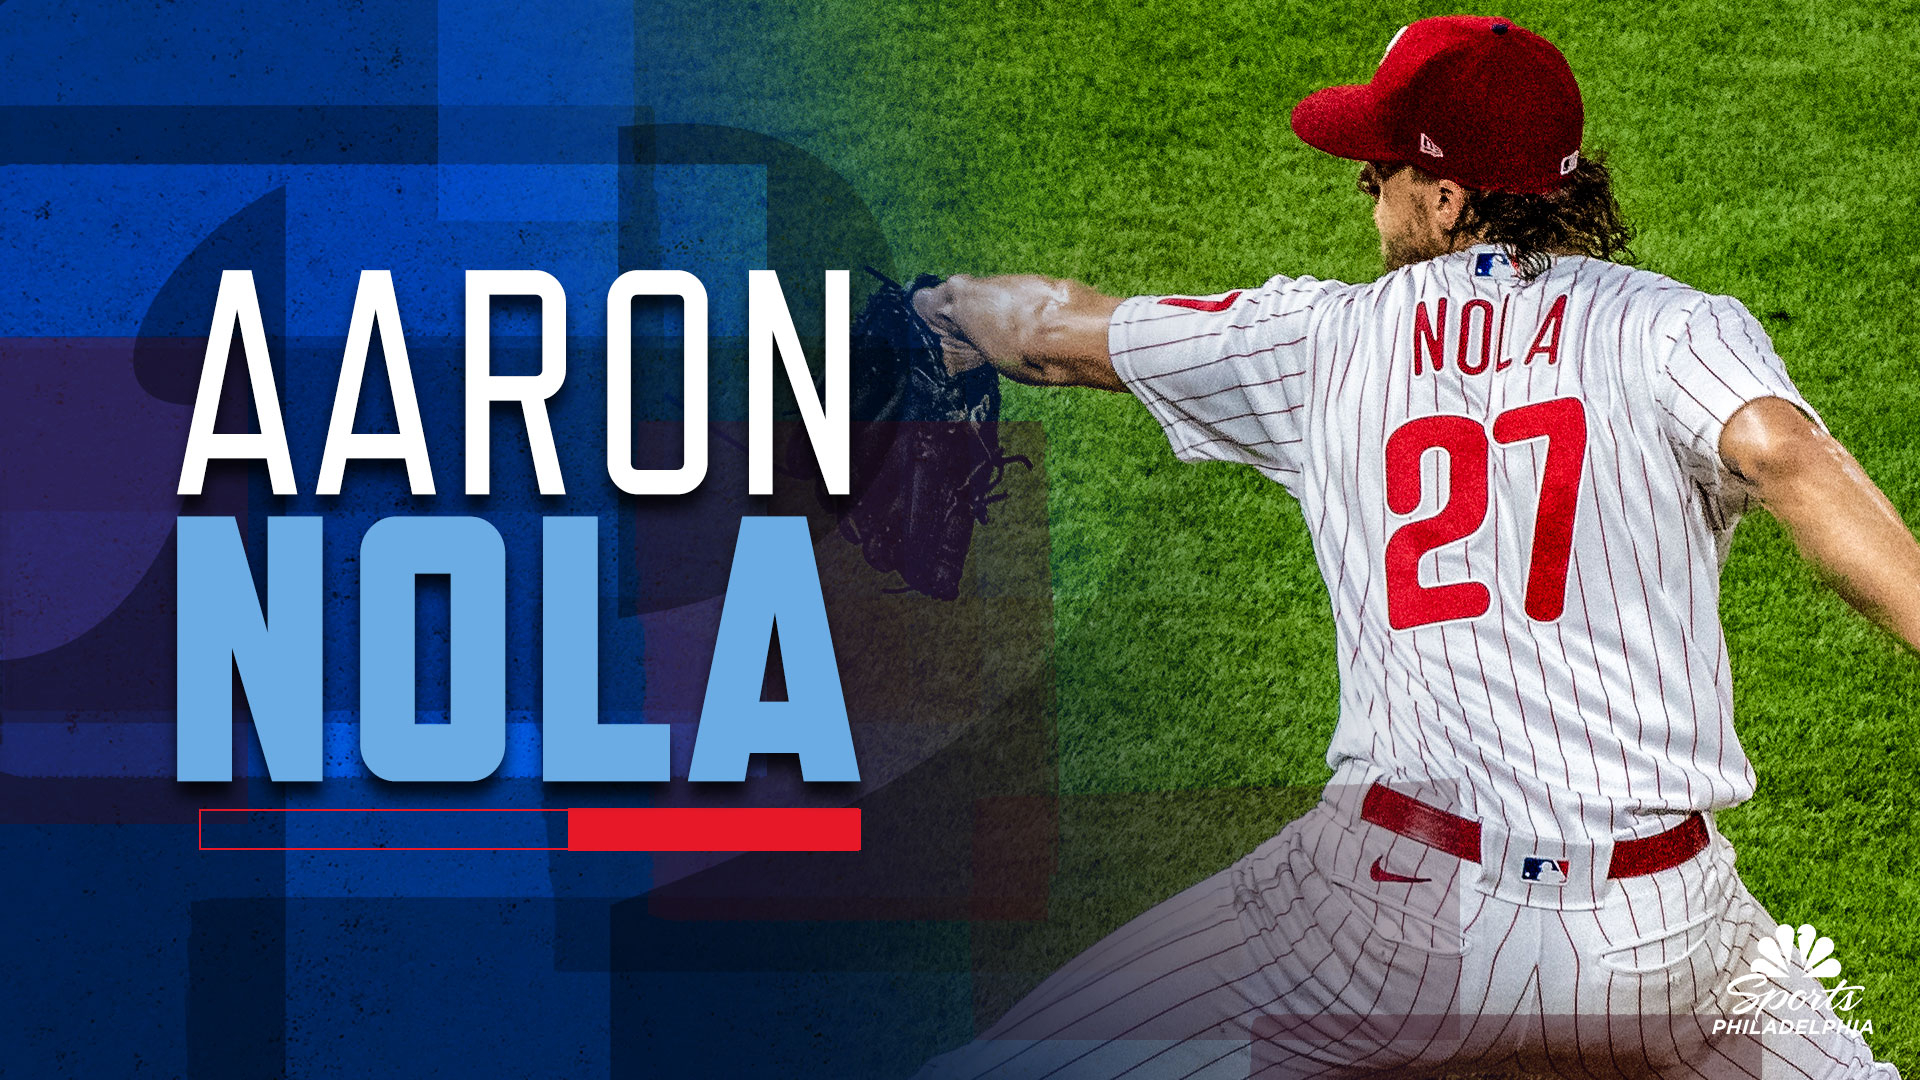 Philadelphia Phillies' Aaron Nola is not an ace pitcher